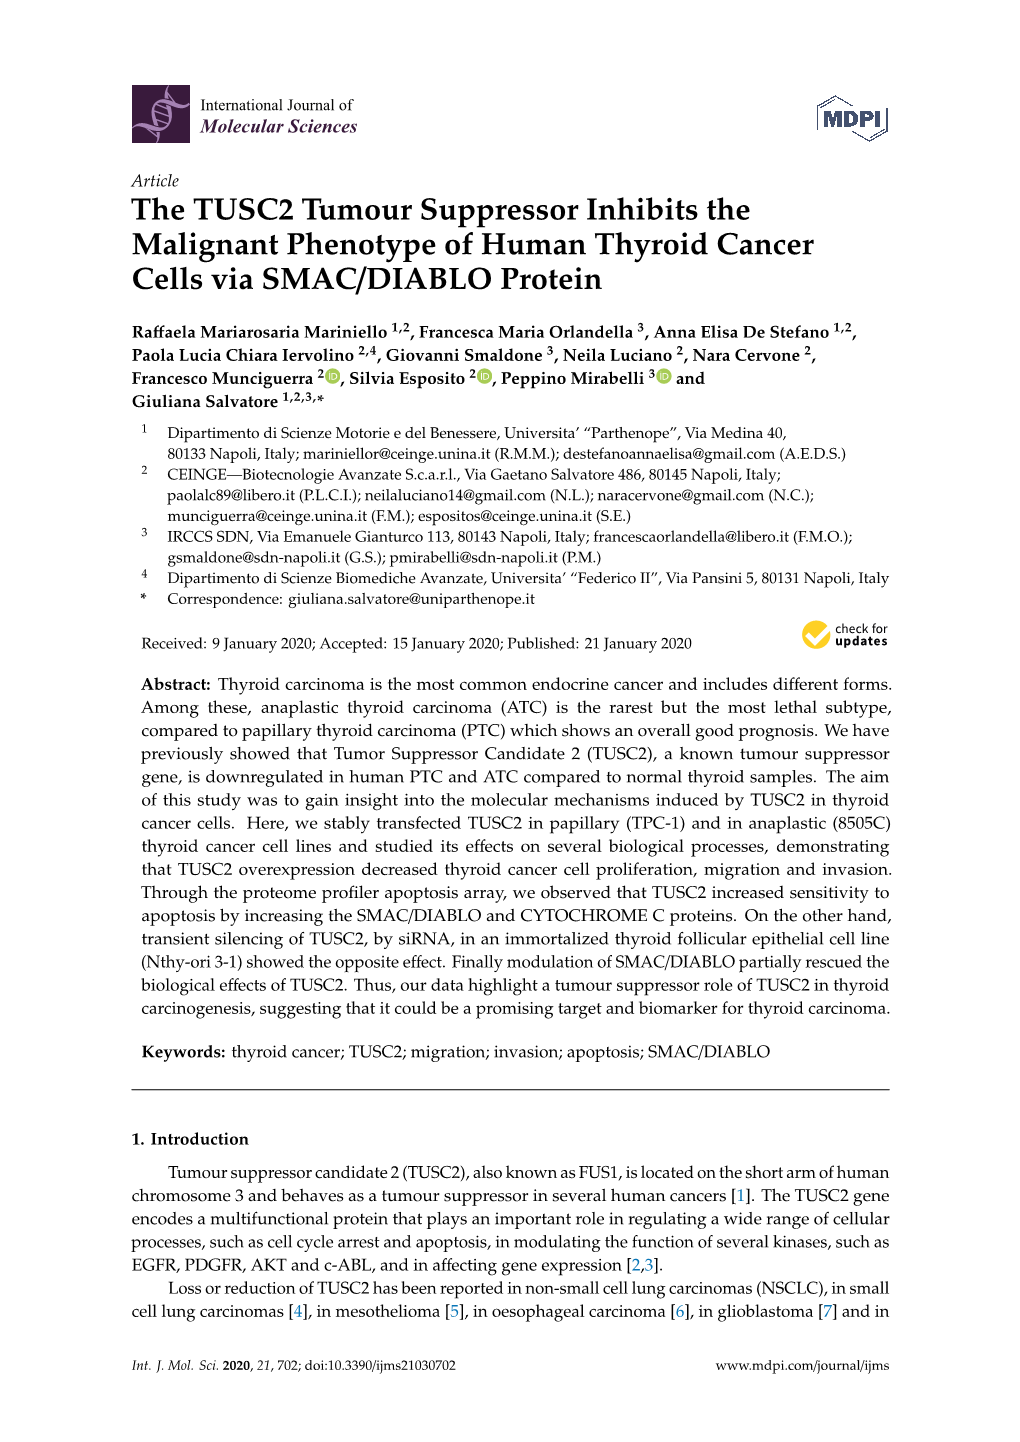 The TUSC2 Tumour Suppressor Inhibits the Malignant Phenotype of Human Thyroid Cancer Cells Via SMAC/DIABLO Protein